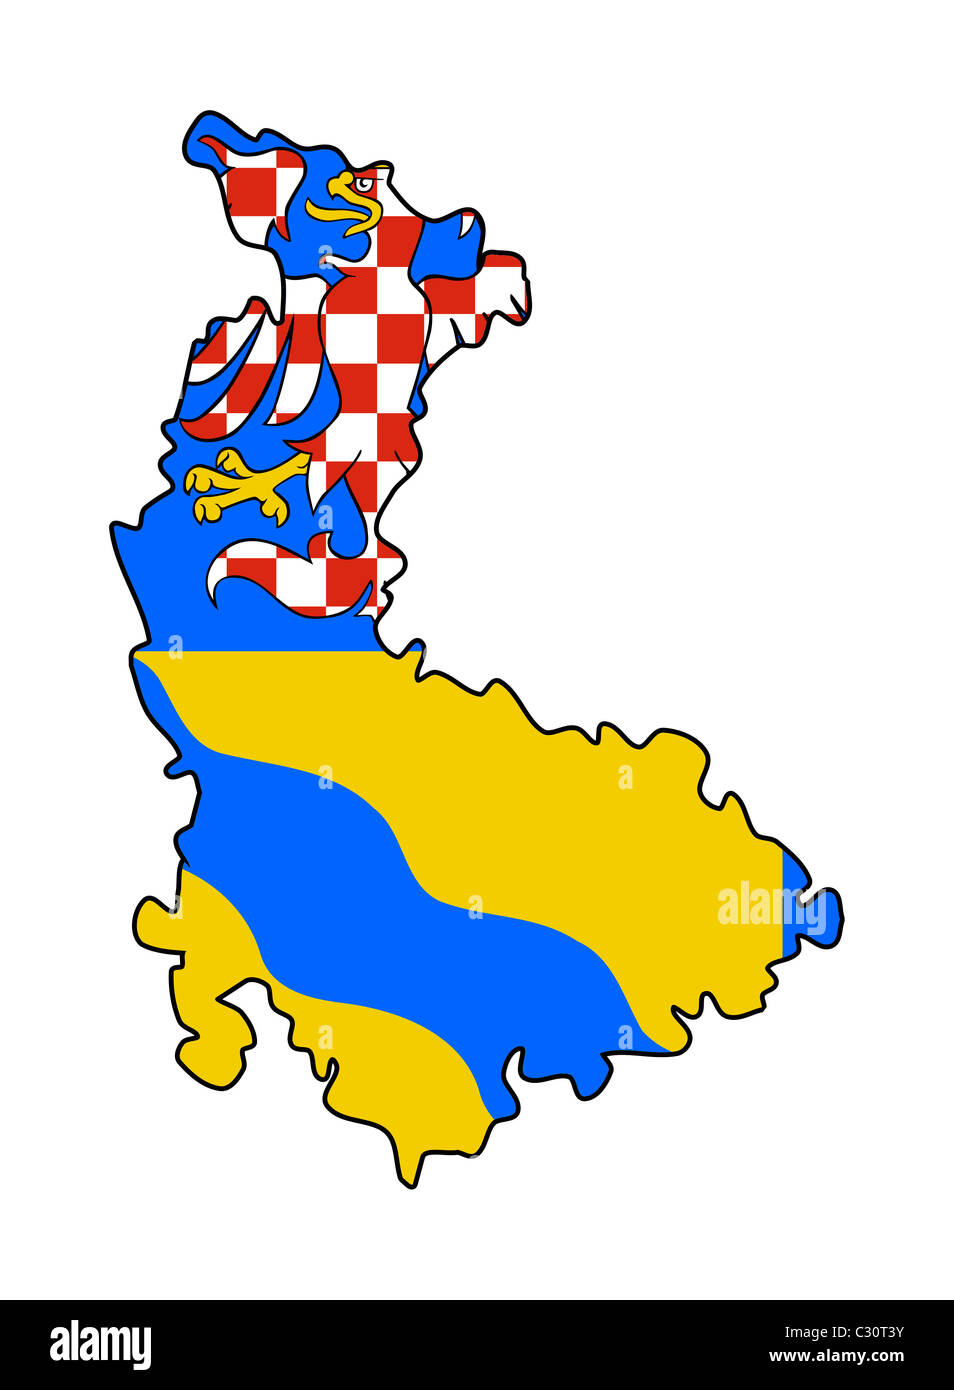 Flag of Olomouc region of Czech Republic on map; isolated on white background. Stock Photo